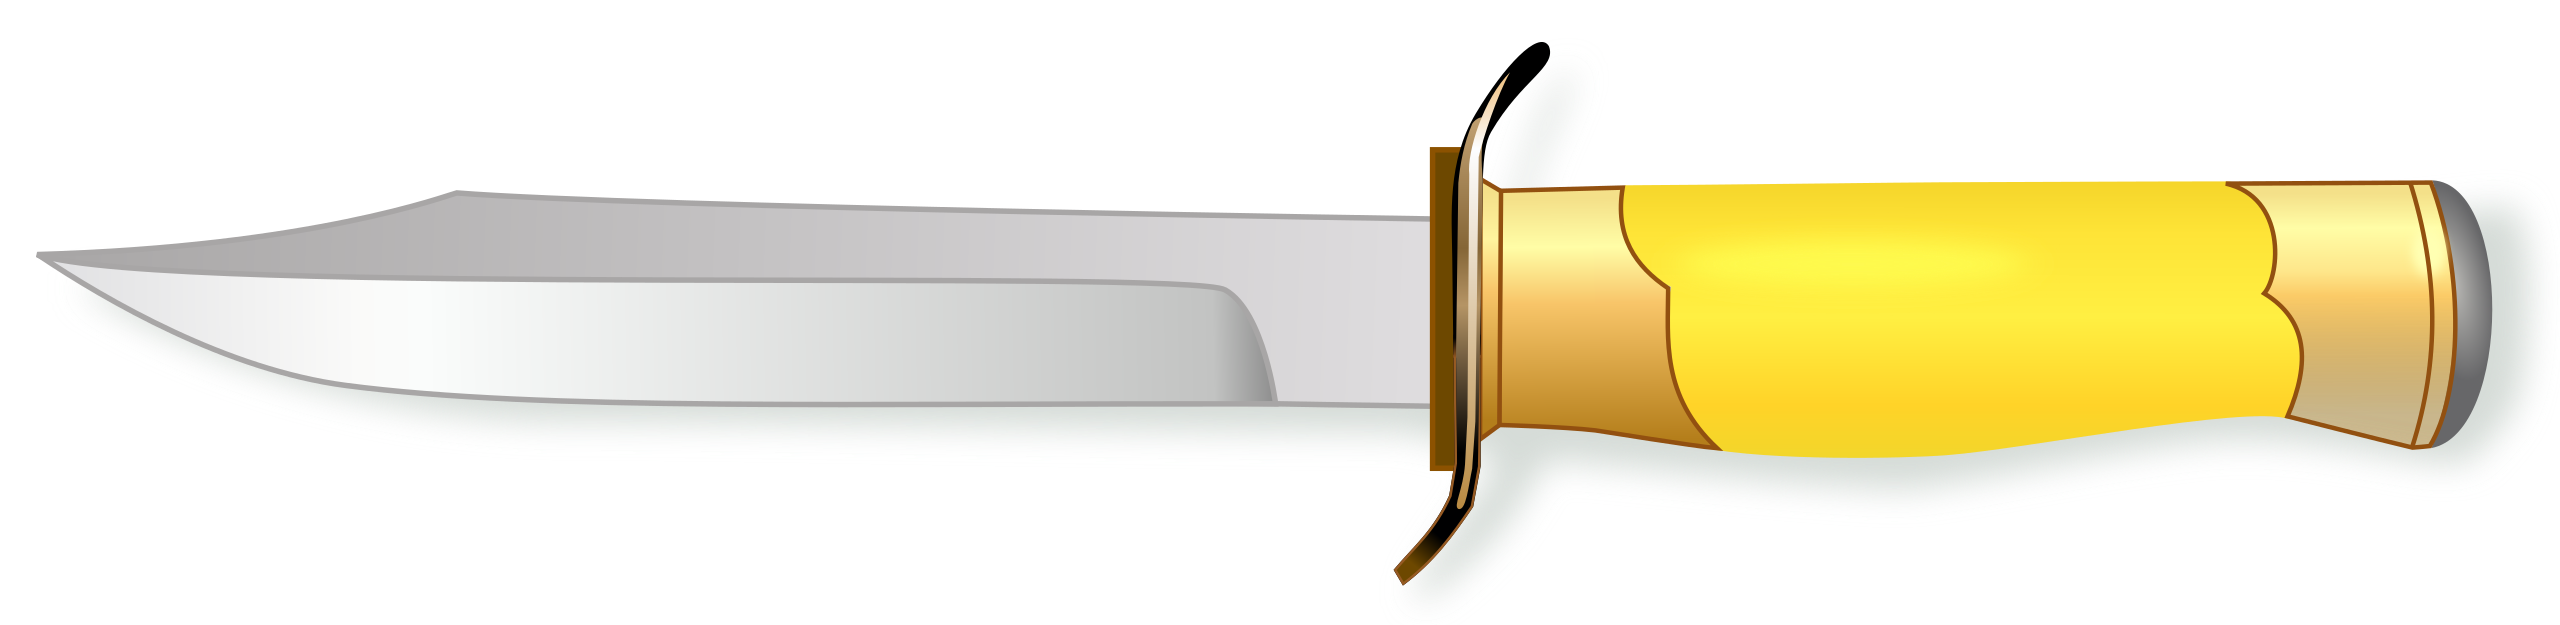 File:Knife soviet award  - Wikimedia Commons